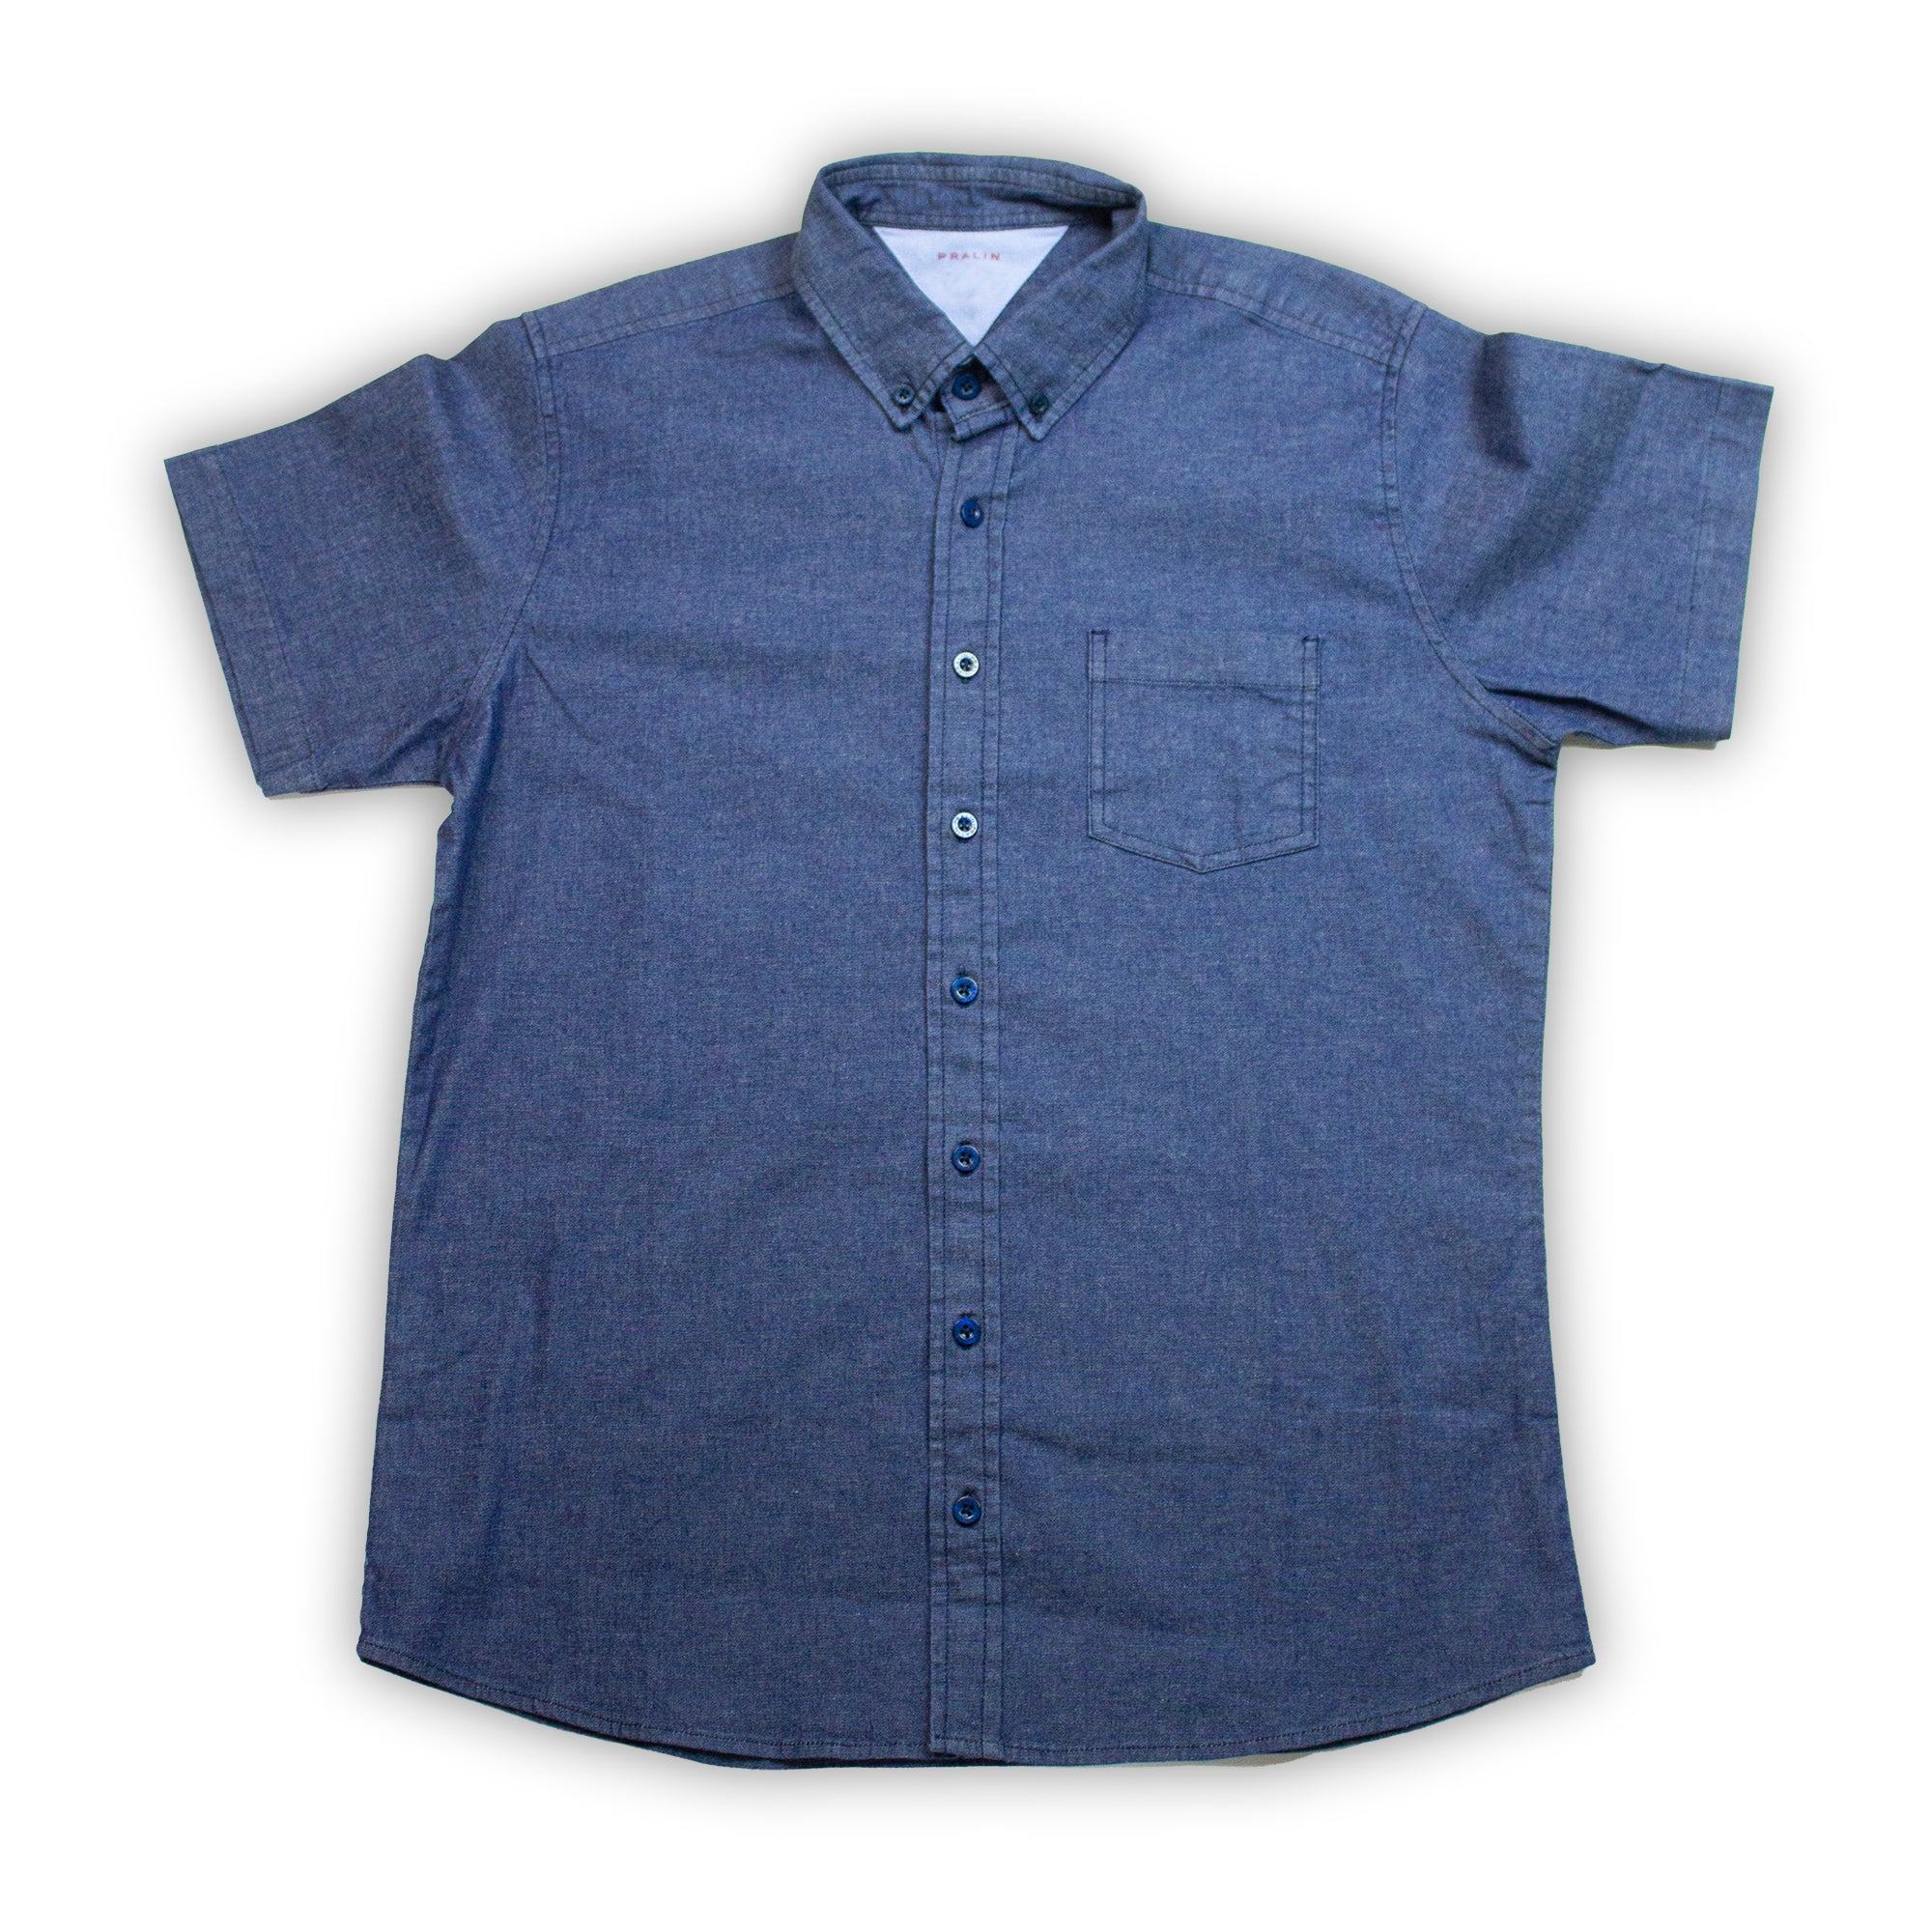 Camisa manga corta para hombre Basica Azul Cielo 100% Algodón - Chimay  Oficial